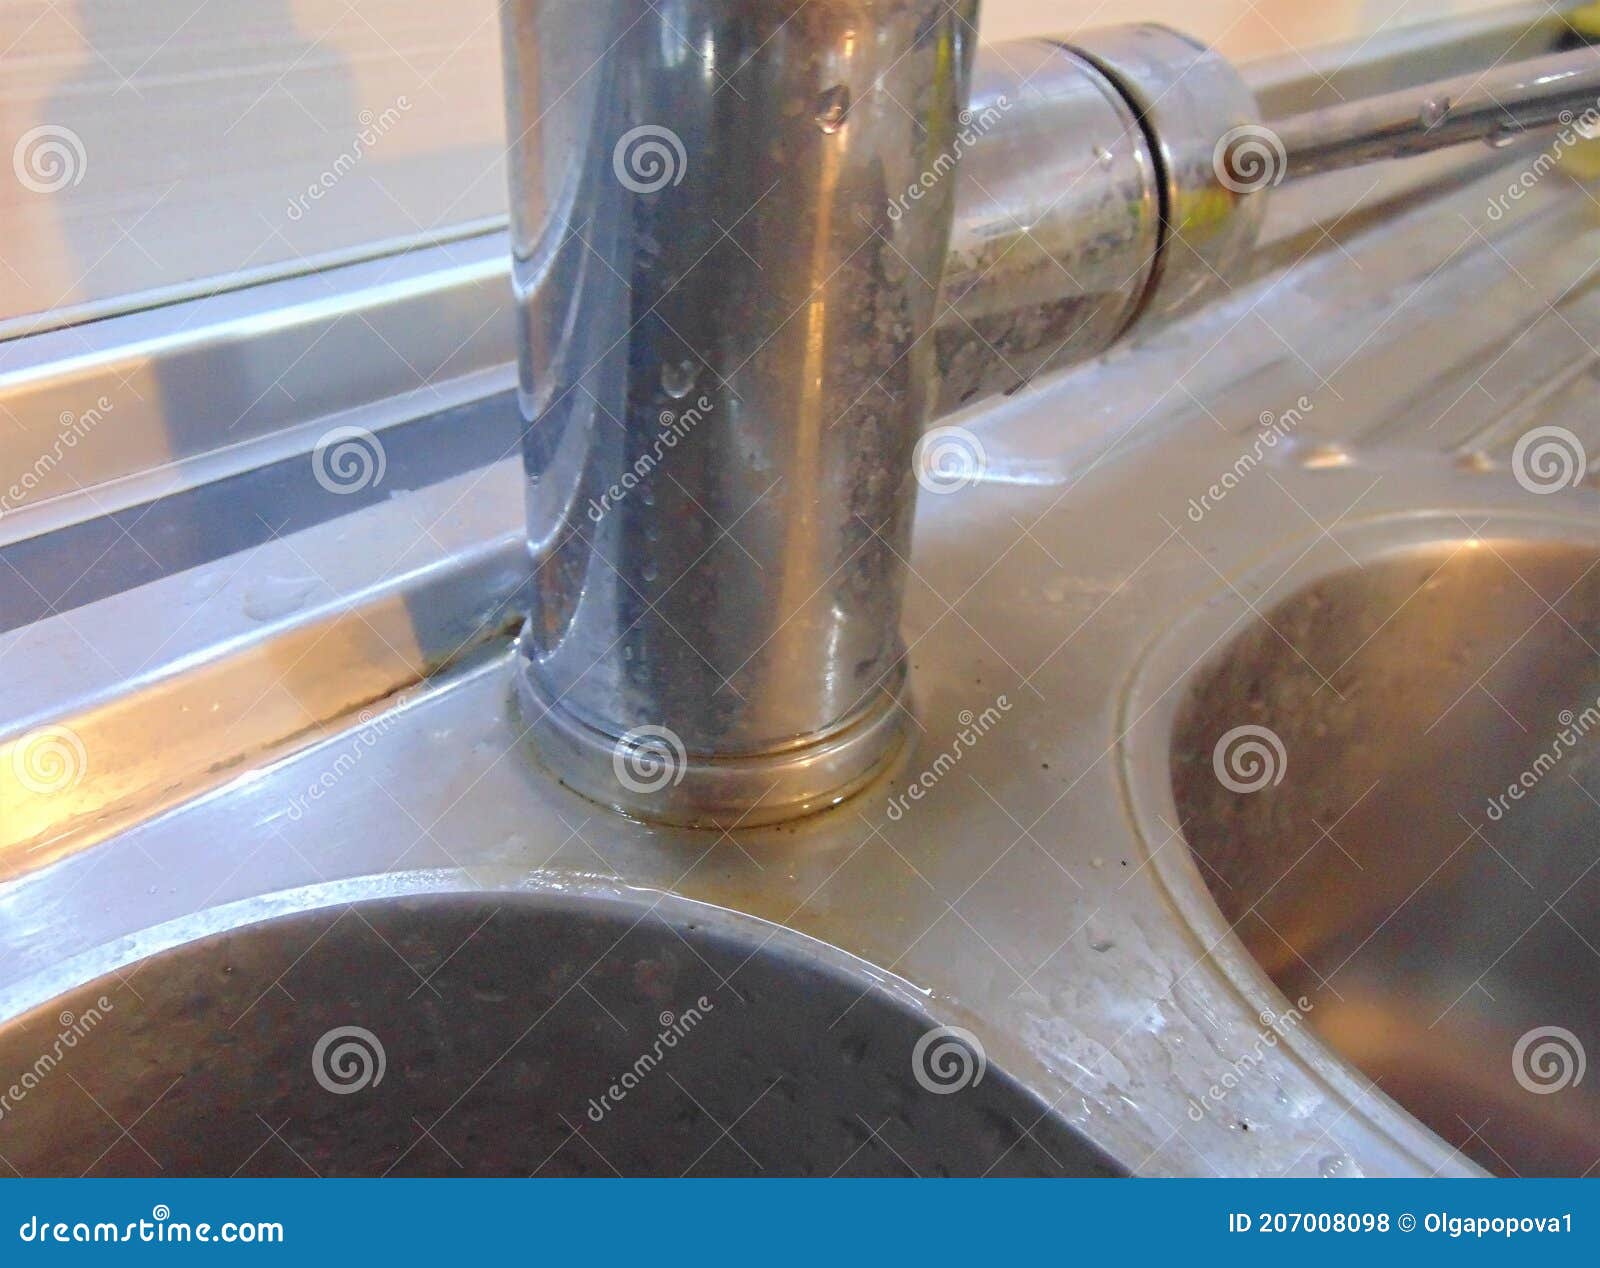 limescale on kitchen sink